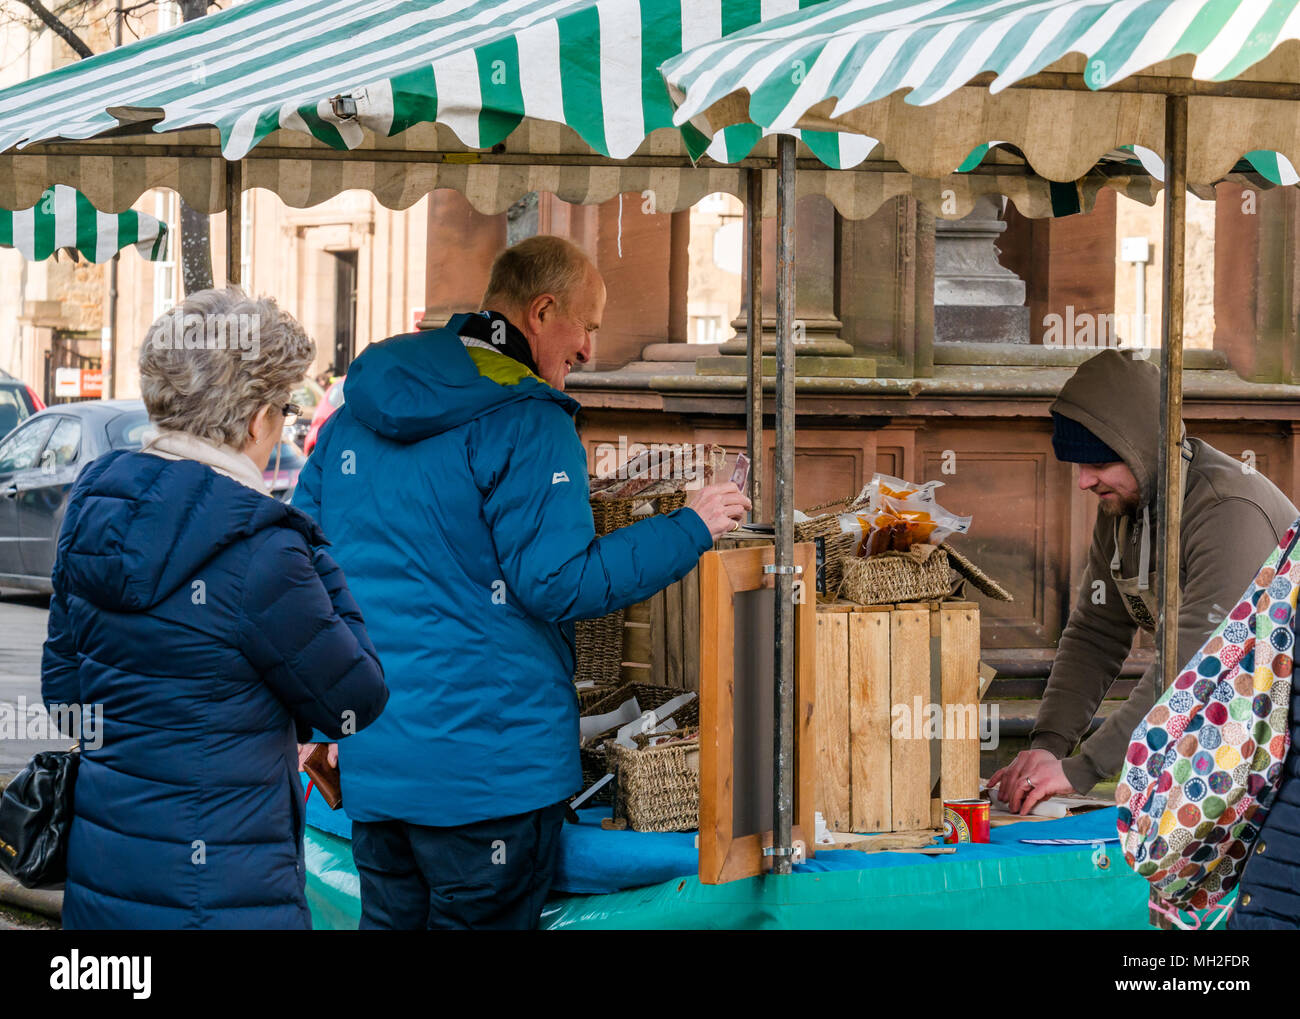 Man buying at outdoor market stall, Haddington Farmers Market, Place d'Aubigny, Court Street, East Lothian, UK Stock Photo